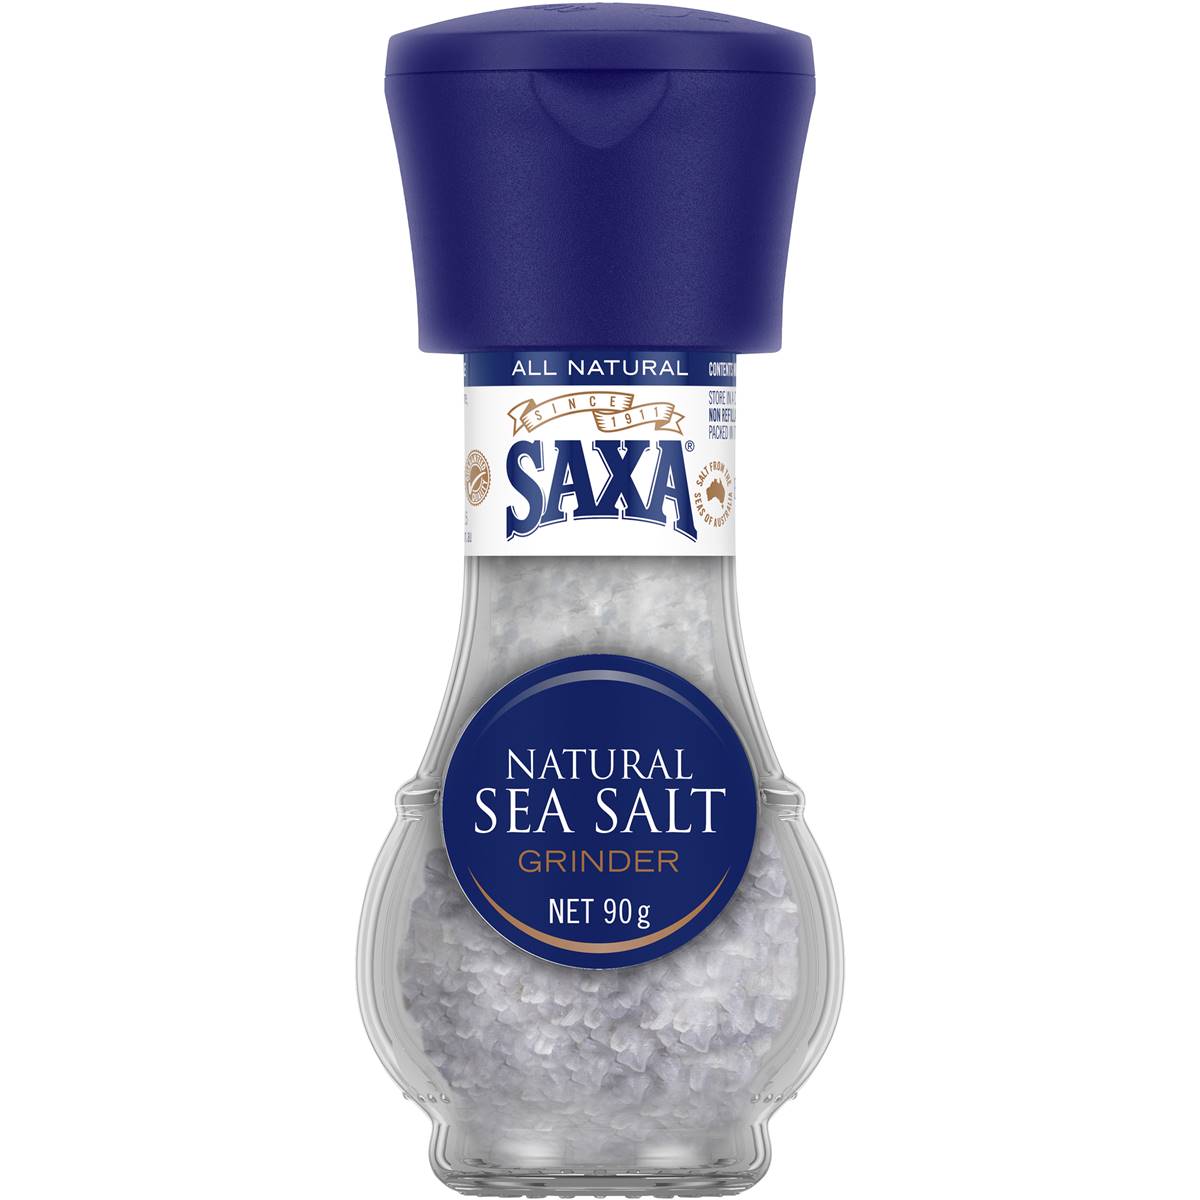 https://www.mustakshif.com/public/uploads/products/saxa-saxa-natural-sea-salt-grinder-90g_93681063_Mustakshif.jpg